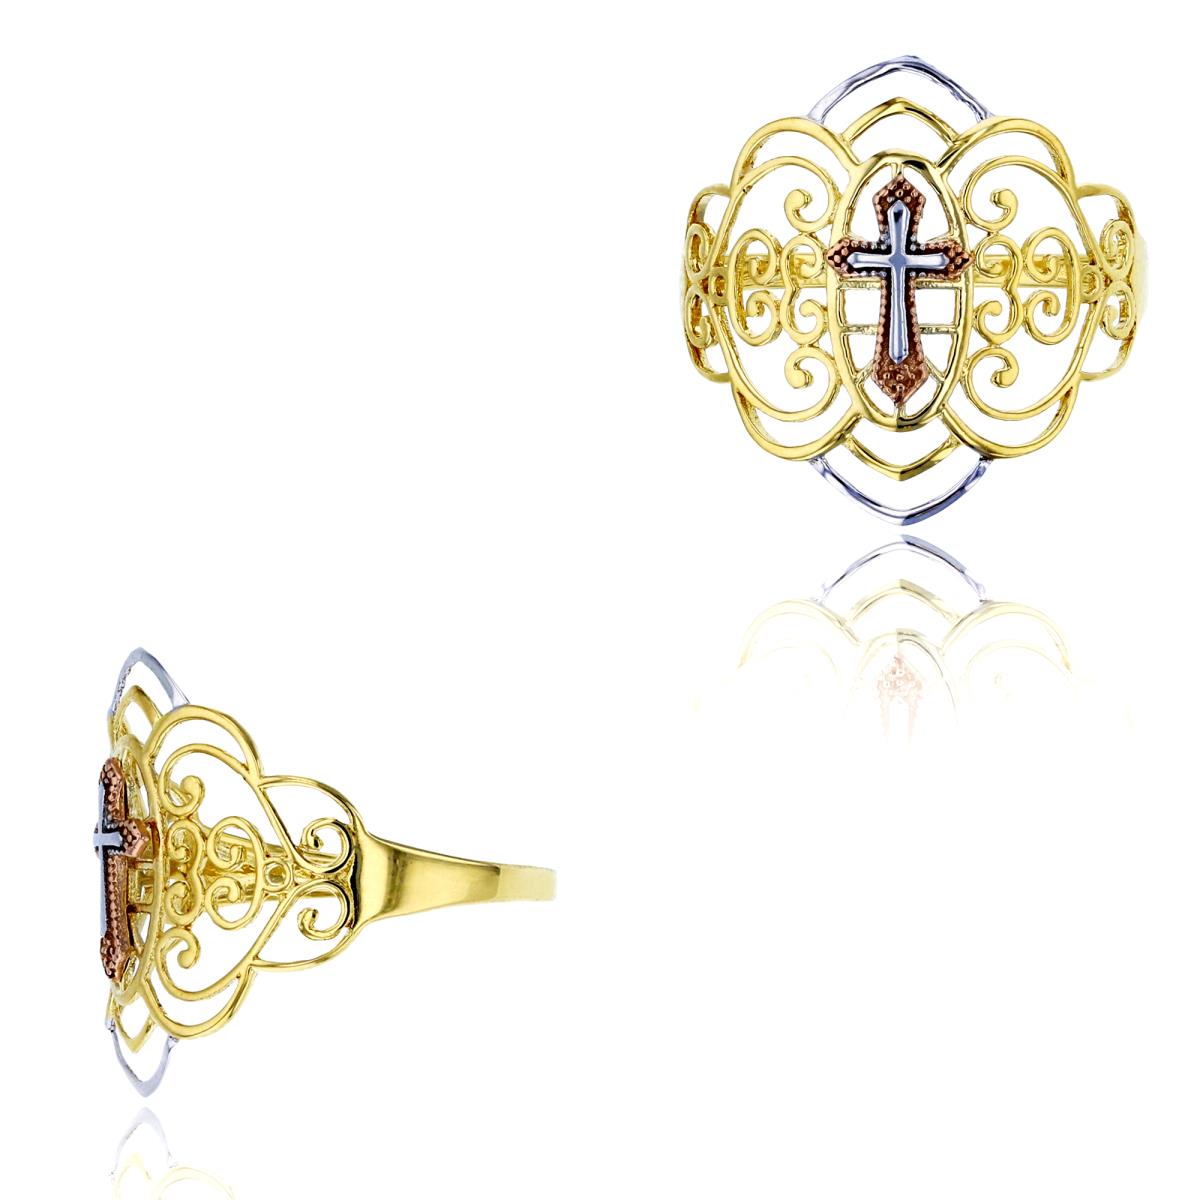 10K Tricolor Gold Polished & Milgraine Cross Filigree Religious Ring